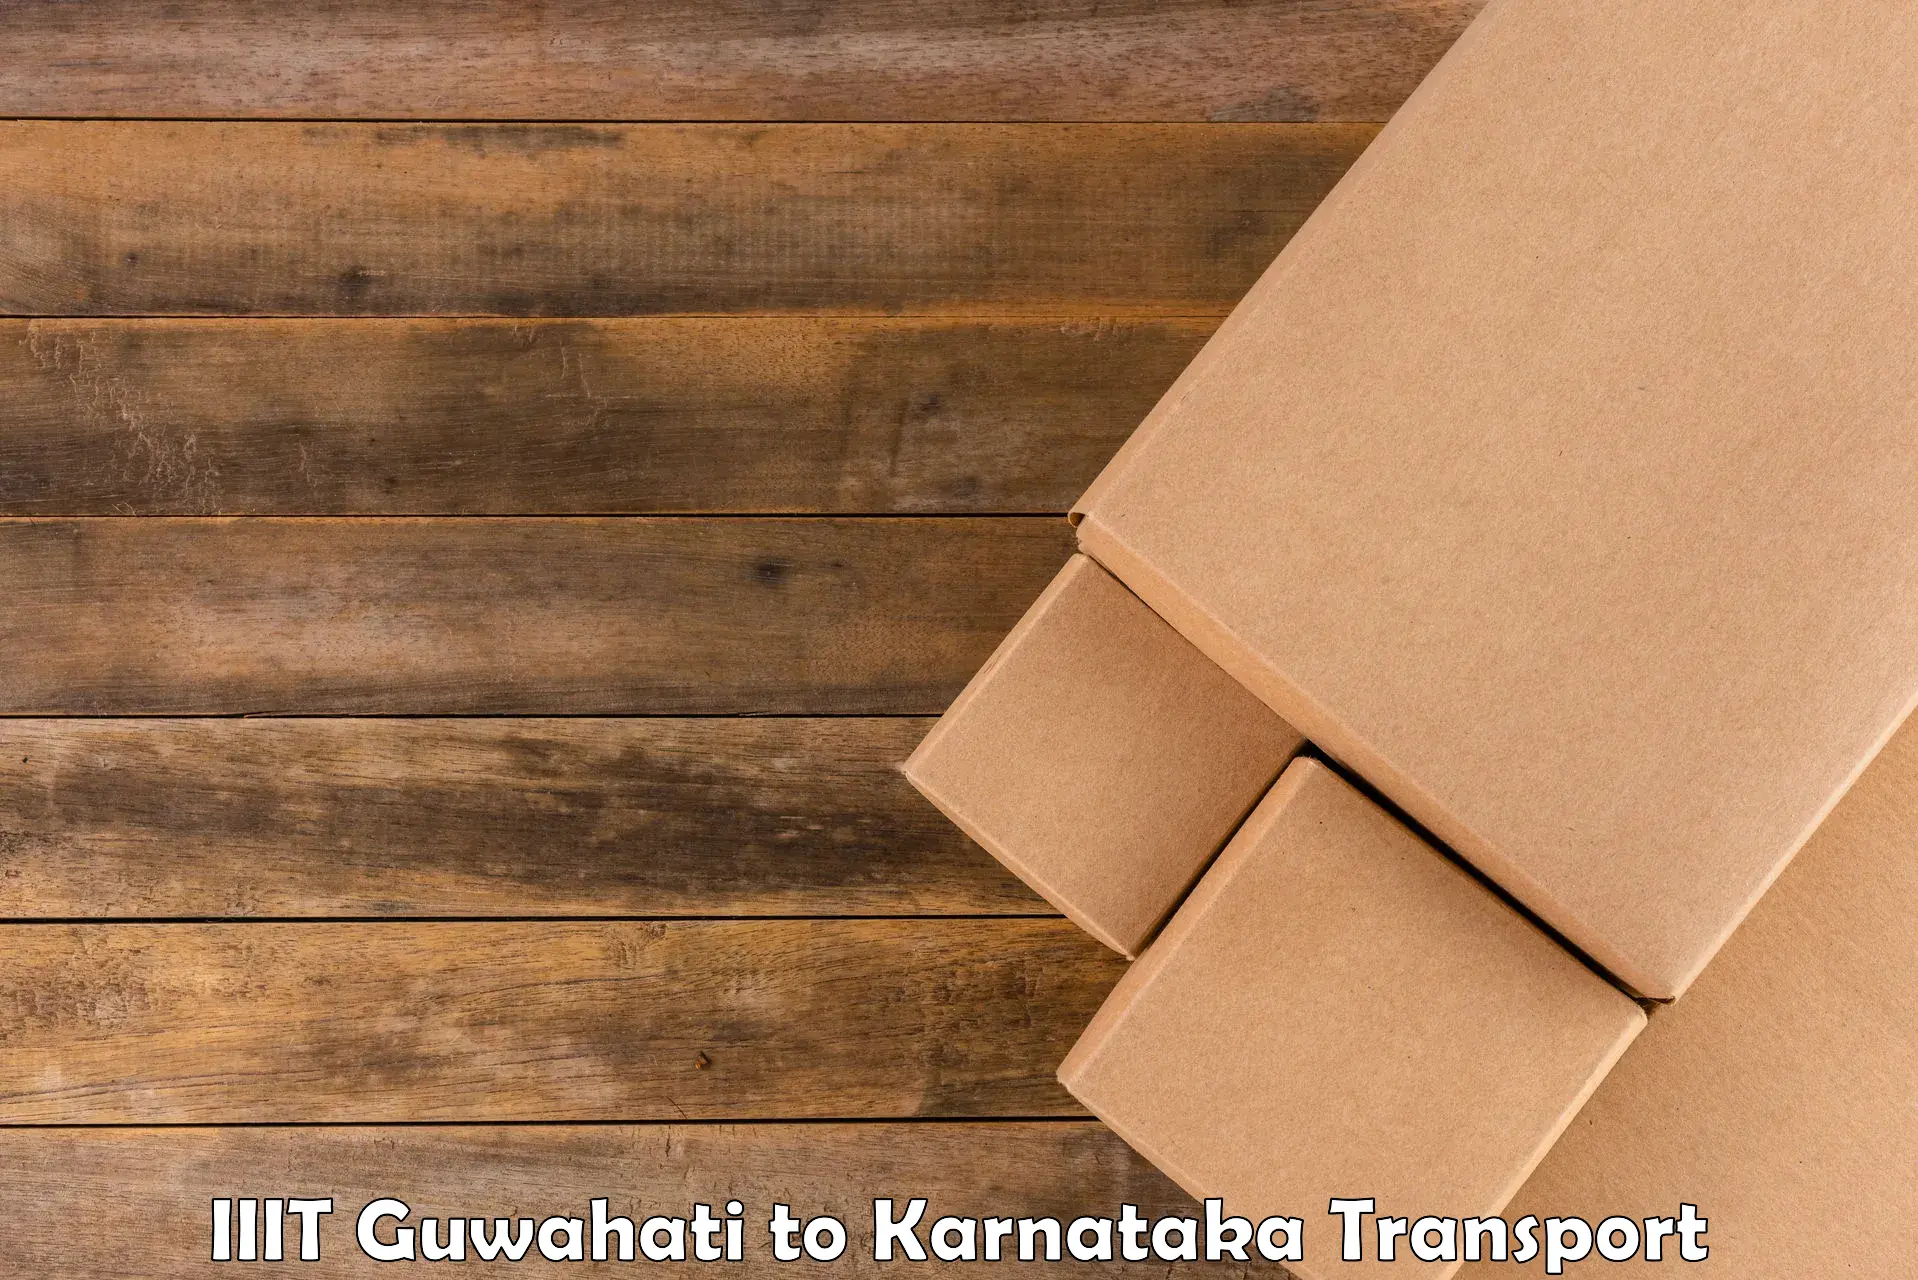 Domestic transport services IIIT Guwahati to Ramanathapura